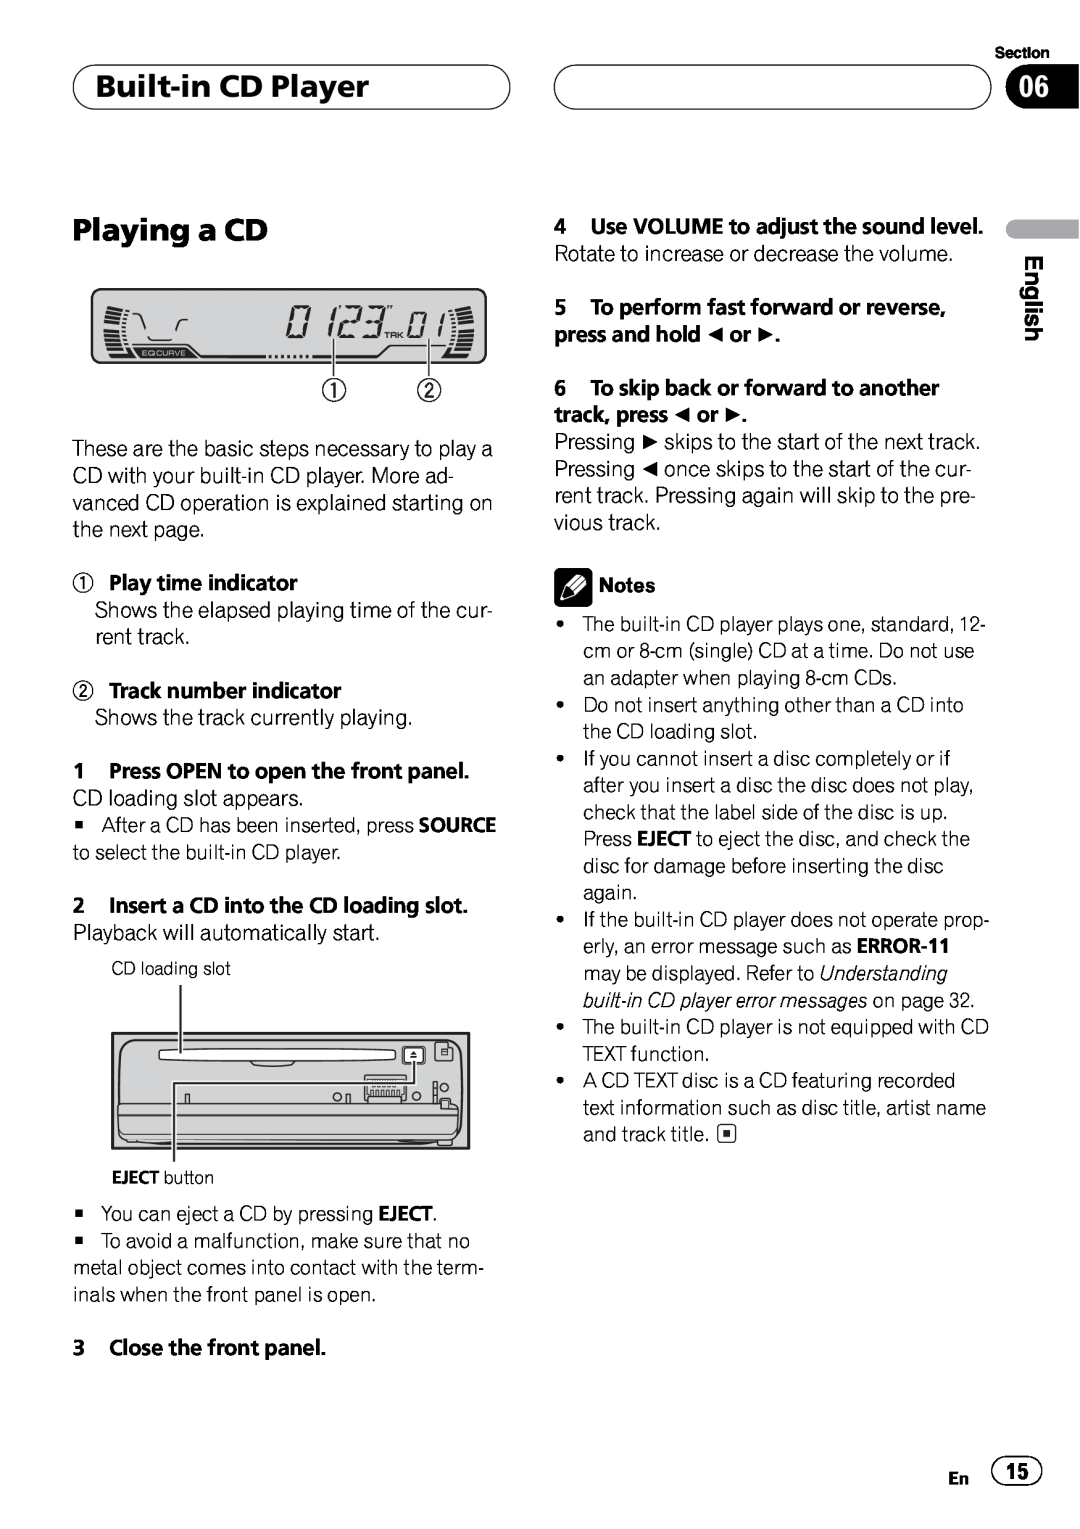 Pioneer DEH-P2600R operation manual 